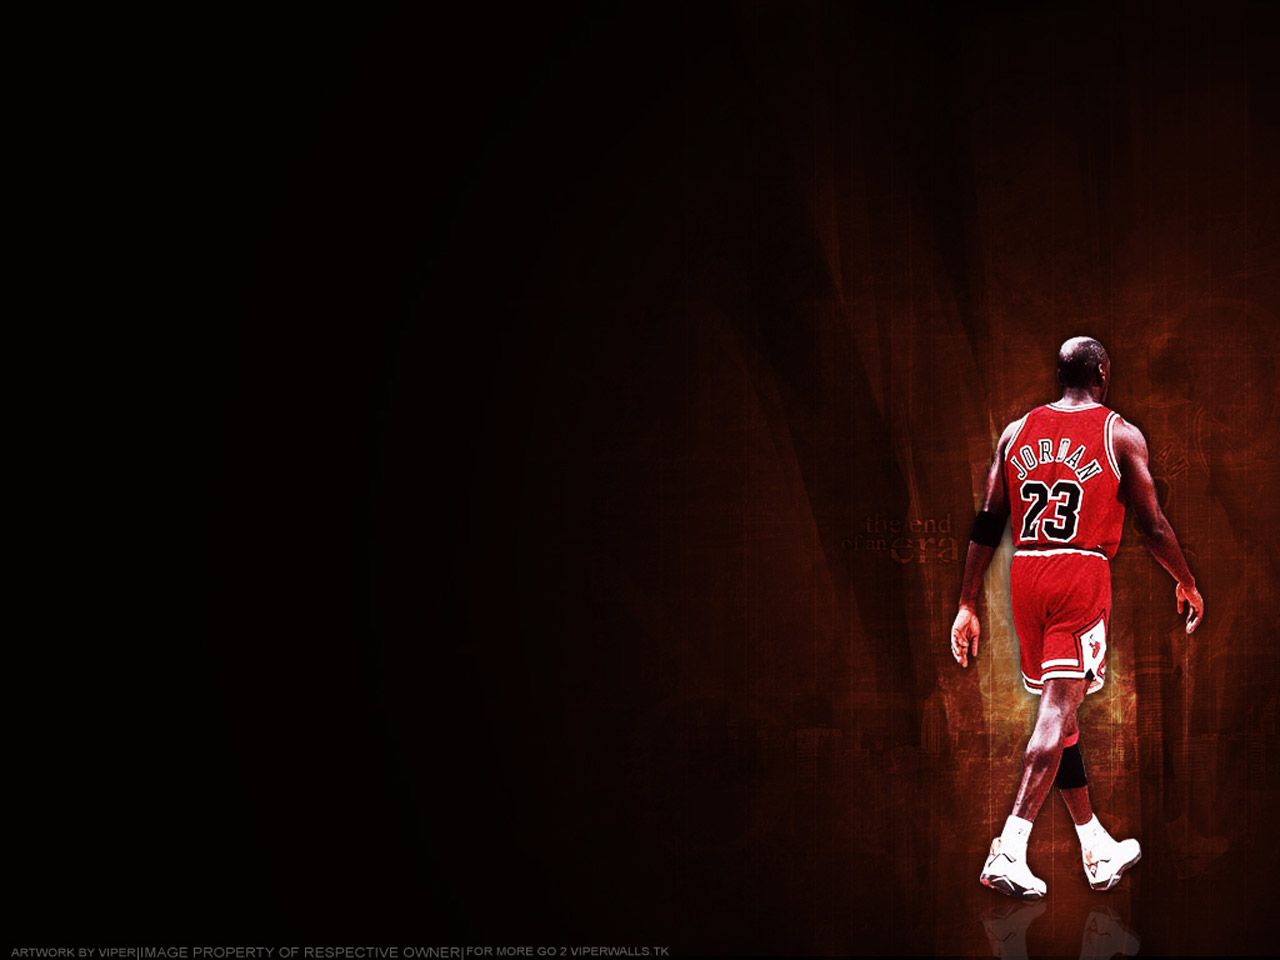 Jordan Wallpaper. Michael Jordan HD Wallpaper, Gold Jordan Wallpaper and Jordan Sports Wallpaper